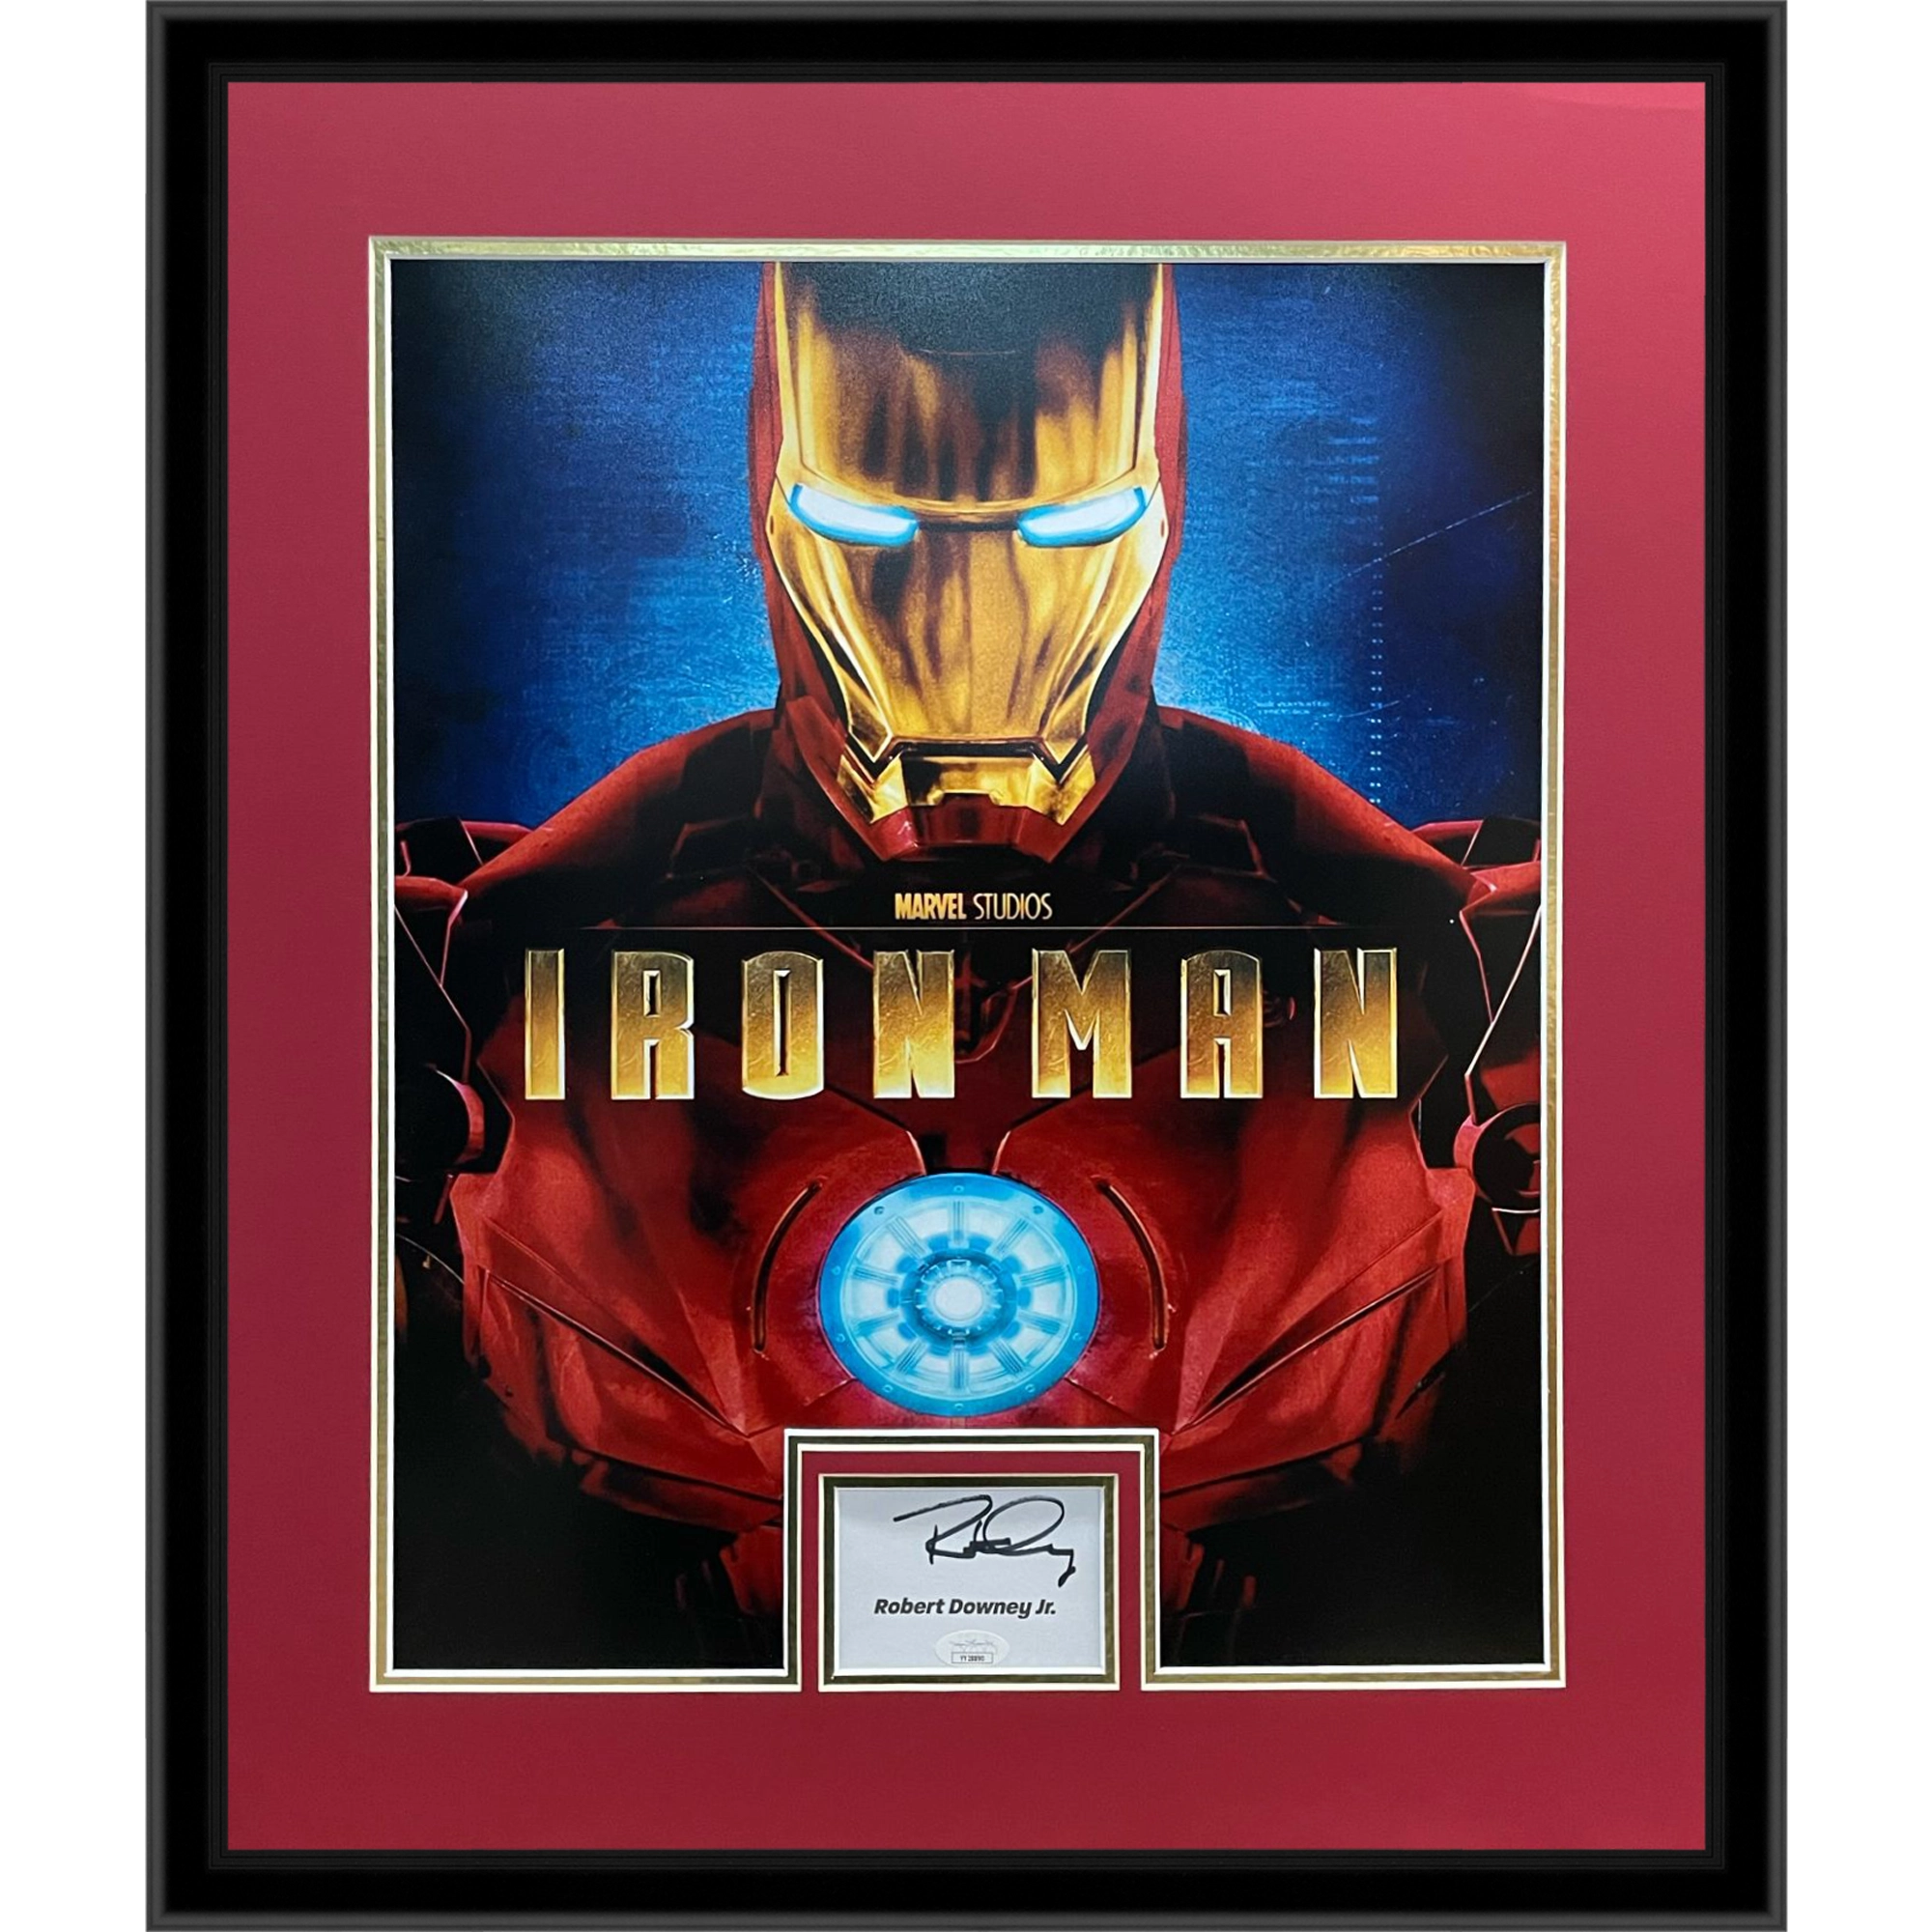 Robert Downey Jr Autographed Iron Man Deluxe Framed 16x20 Movie Poster Piece JSA